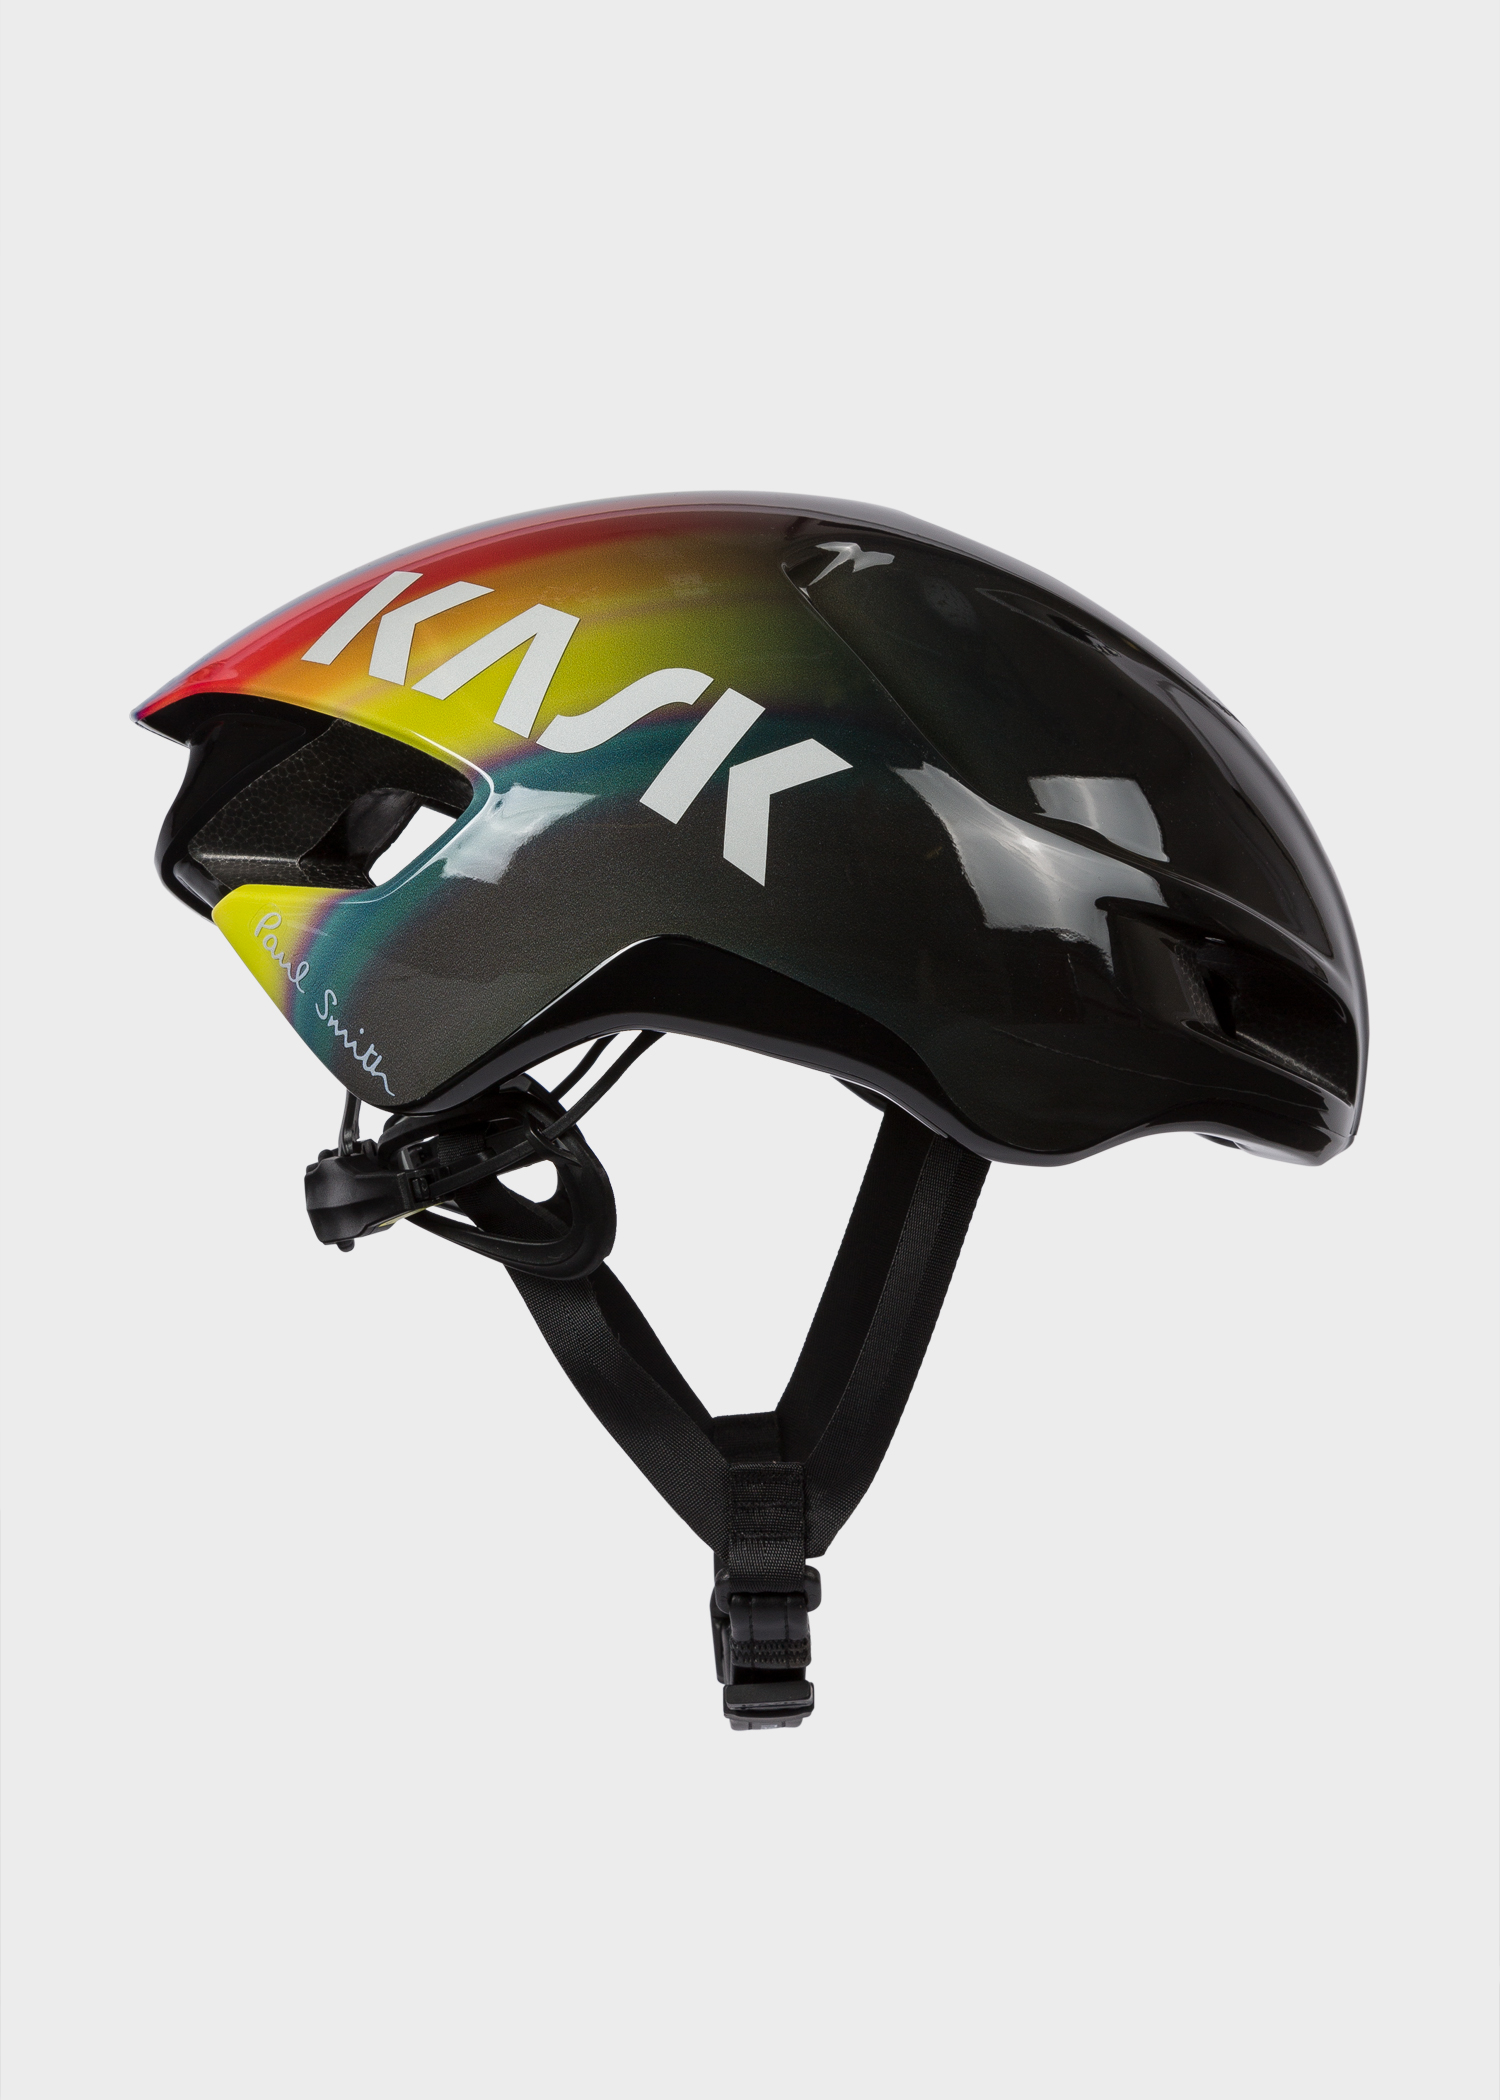 Side view - Paul Smith + Kask 'Rainbow Stripe' Utopia Cycling Helmet